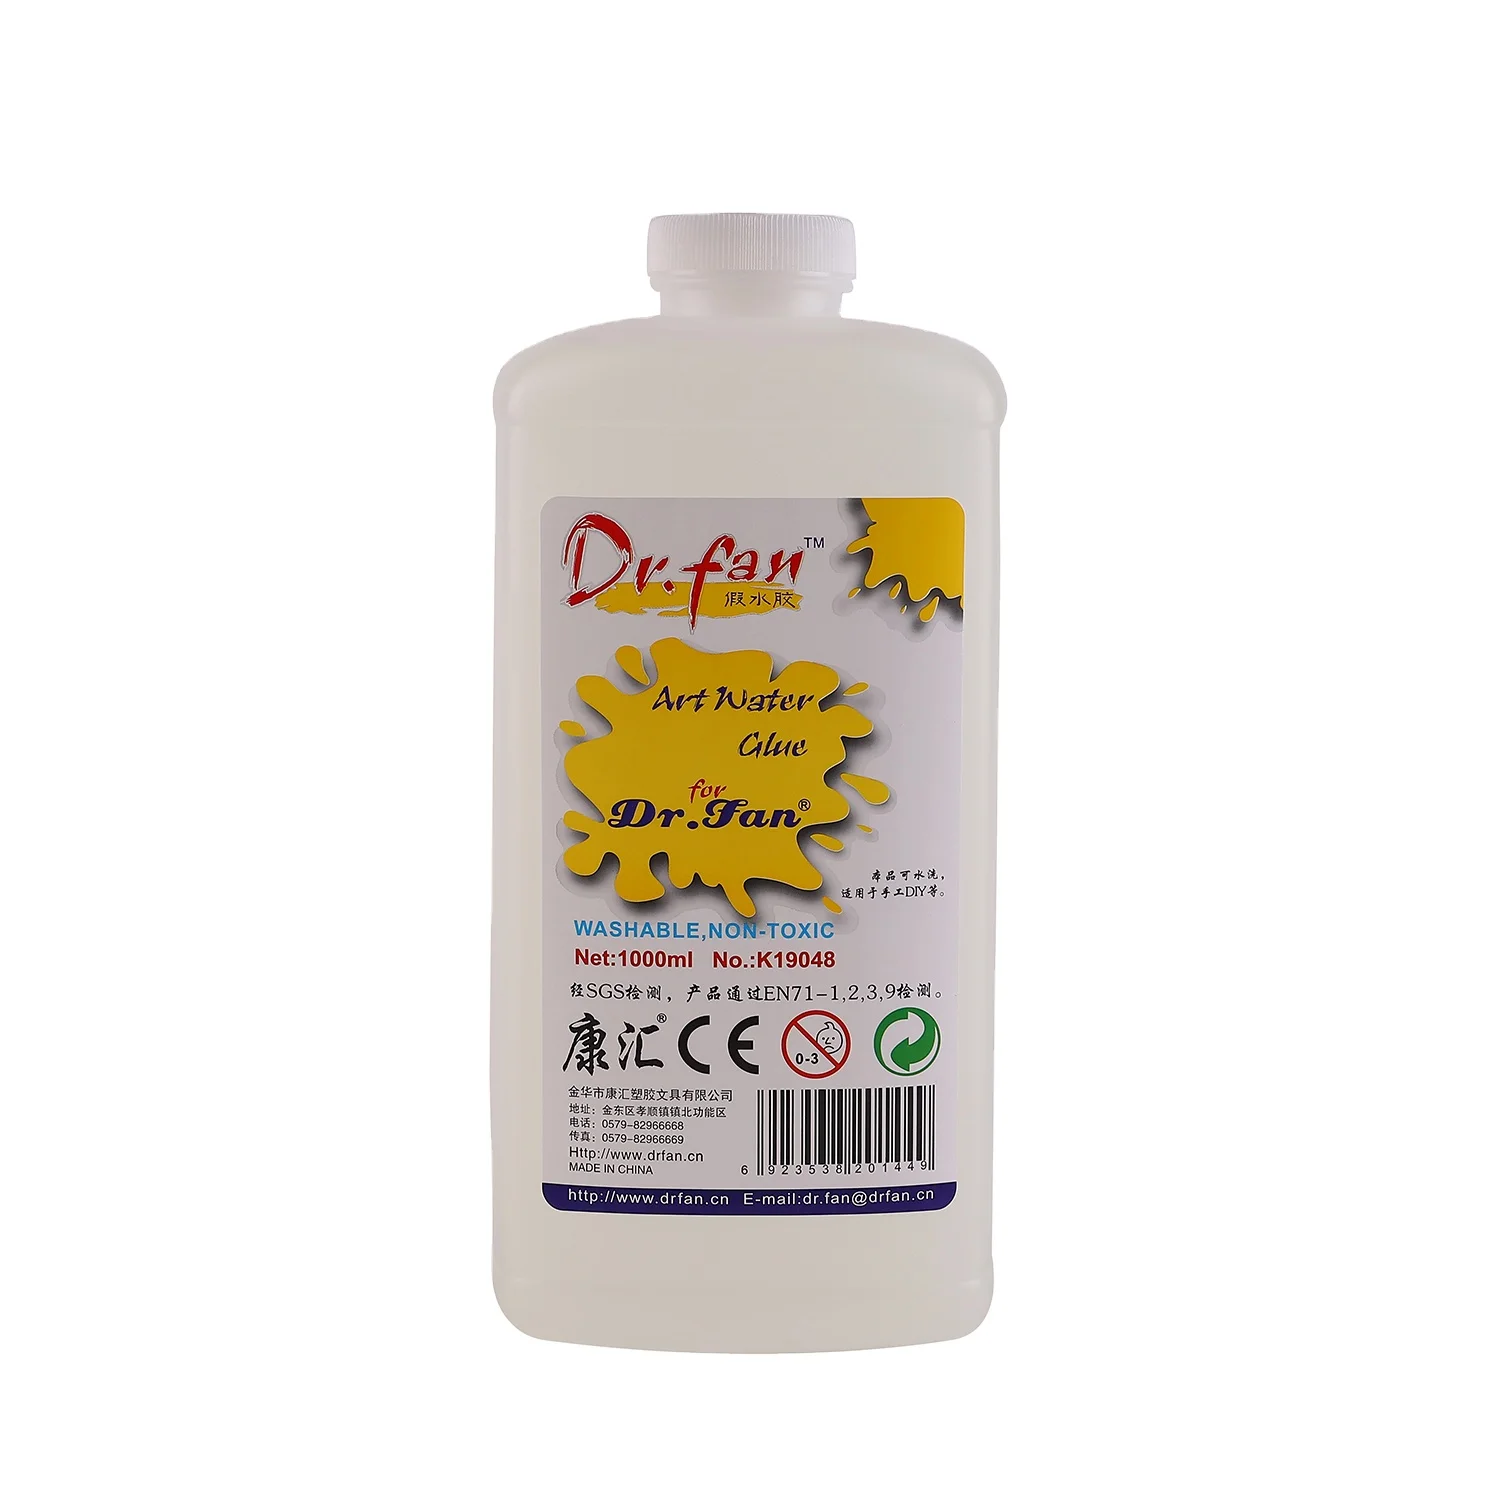 
China Factory supplier drfan 1000ml art water glue for slime glue set  (1600132457275)